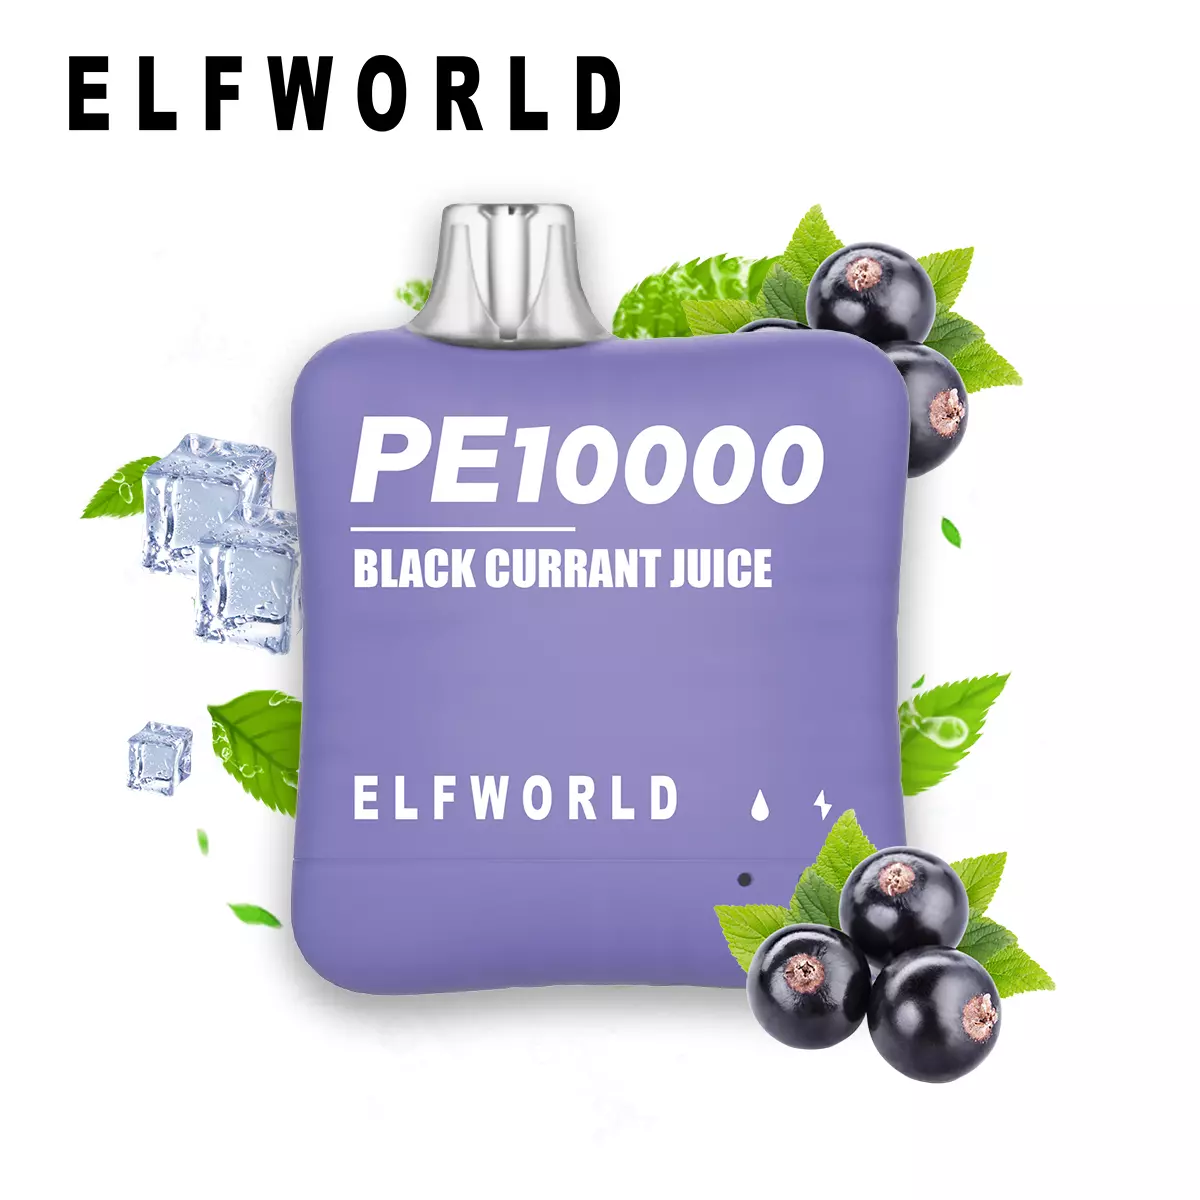 Black Currant Juice ELF WORLD PE 10000